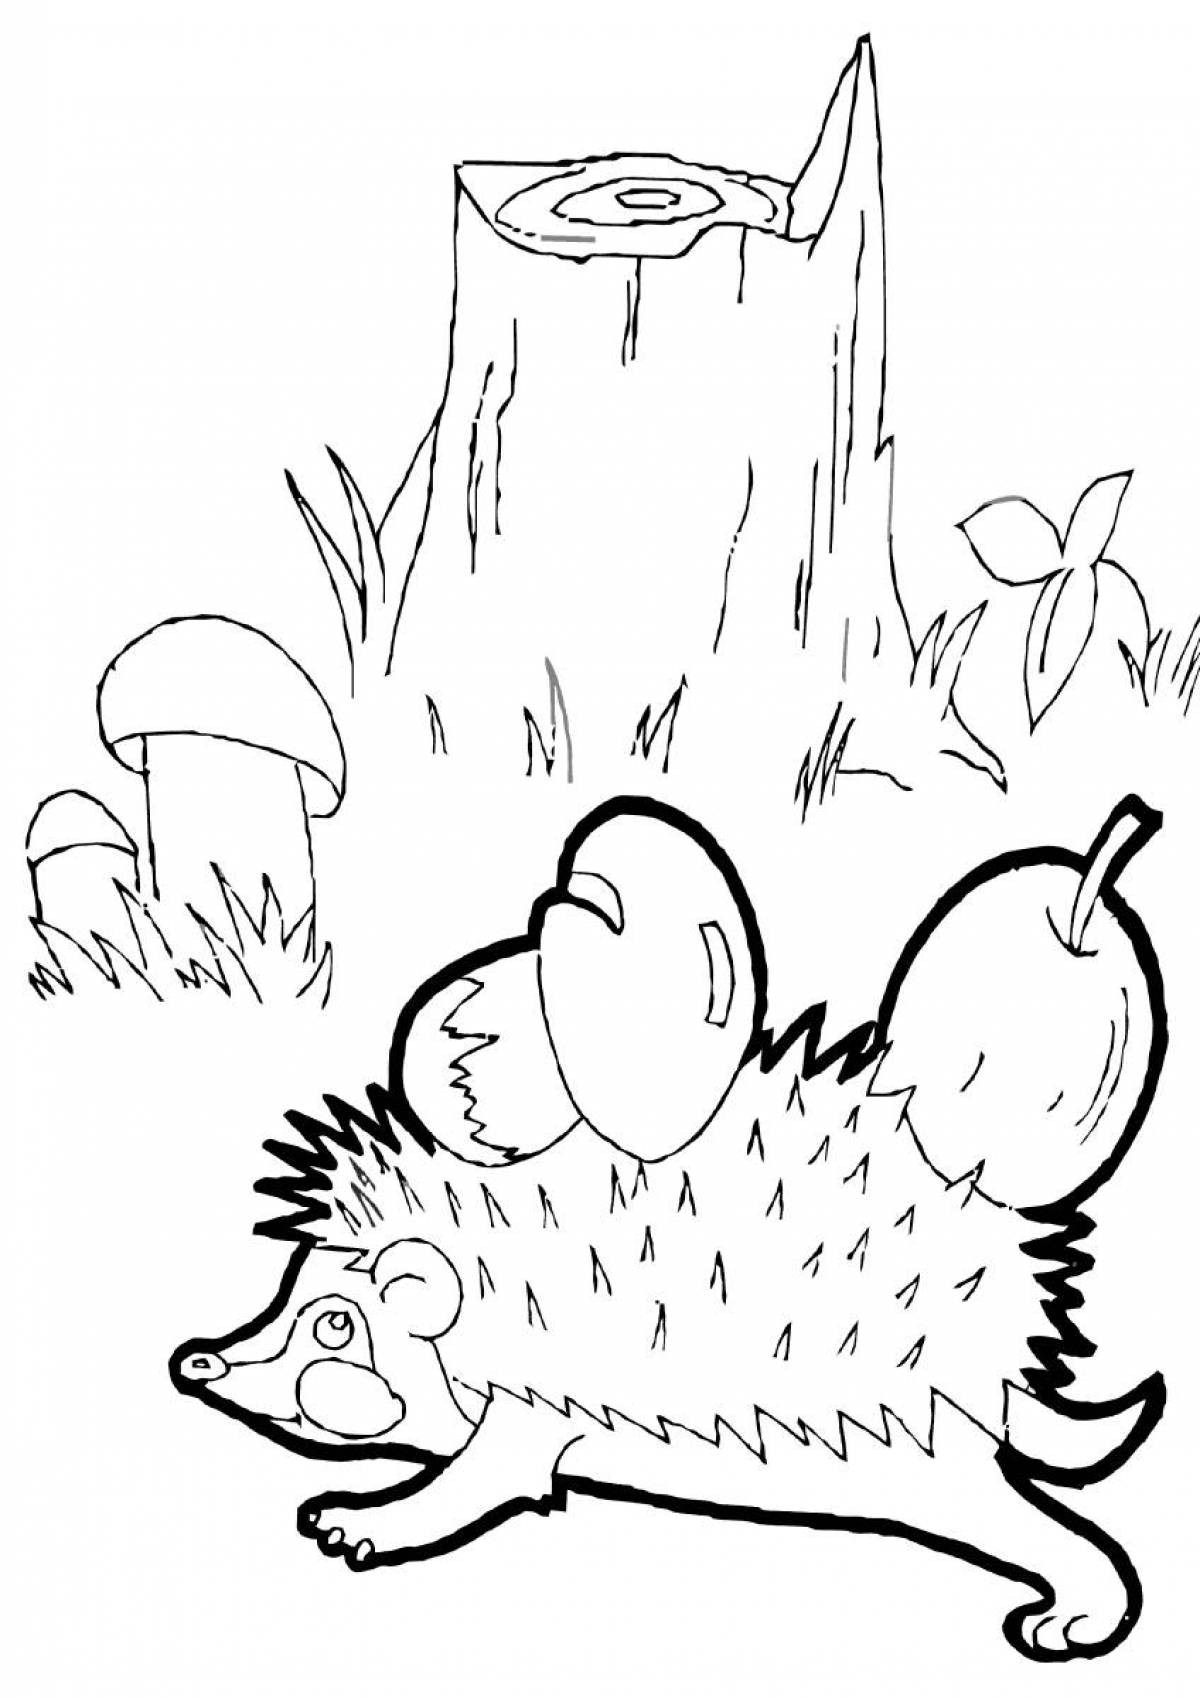 Stump and hedgehog